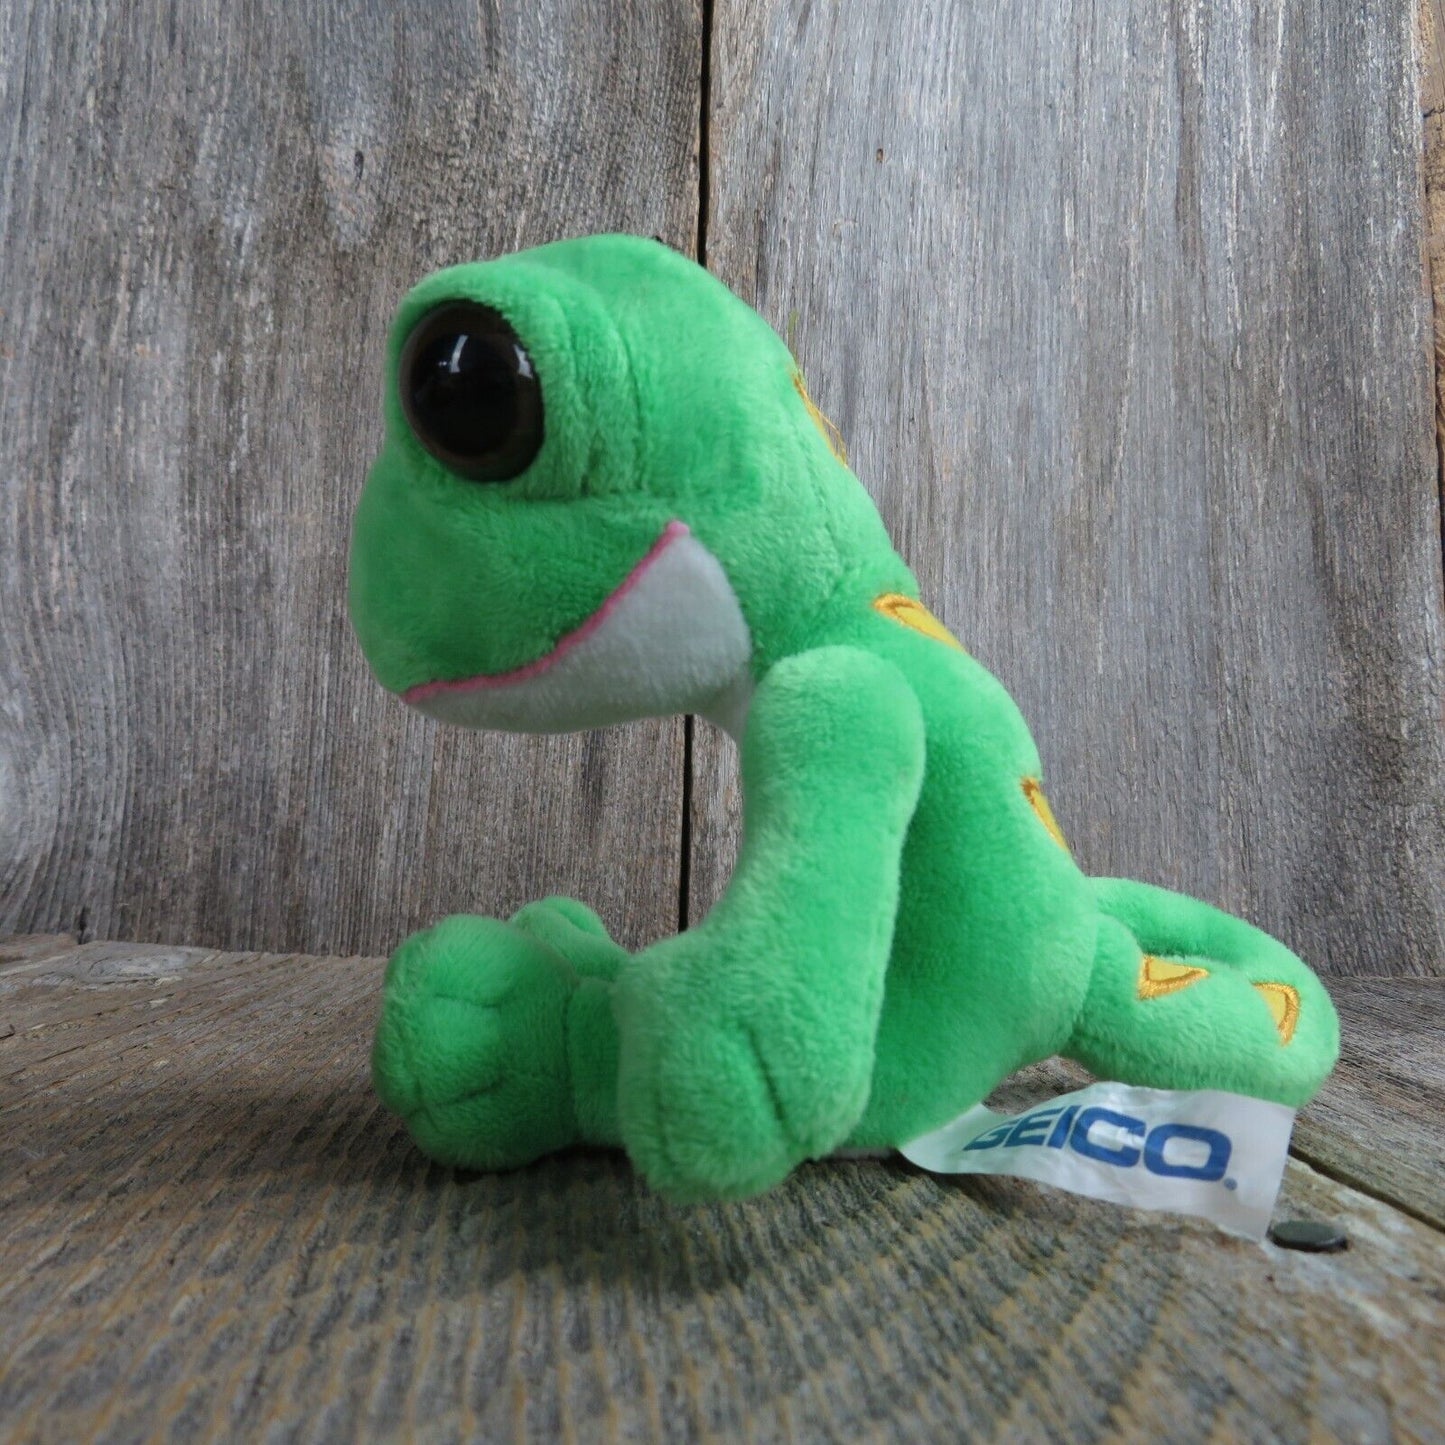 Geico Gecko Lizard Plush Green Yellow Insurance Promotional Stuffed Animal